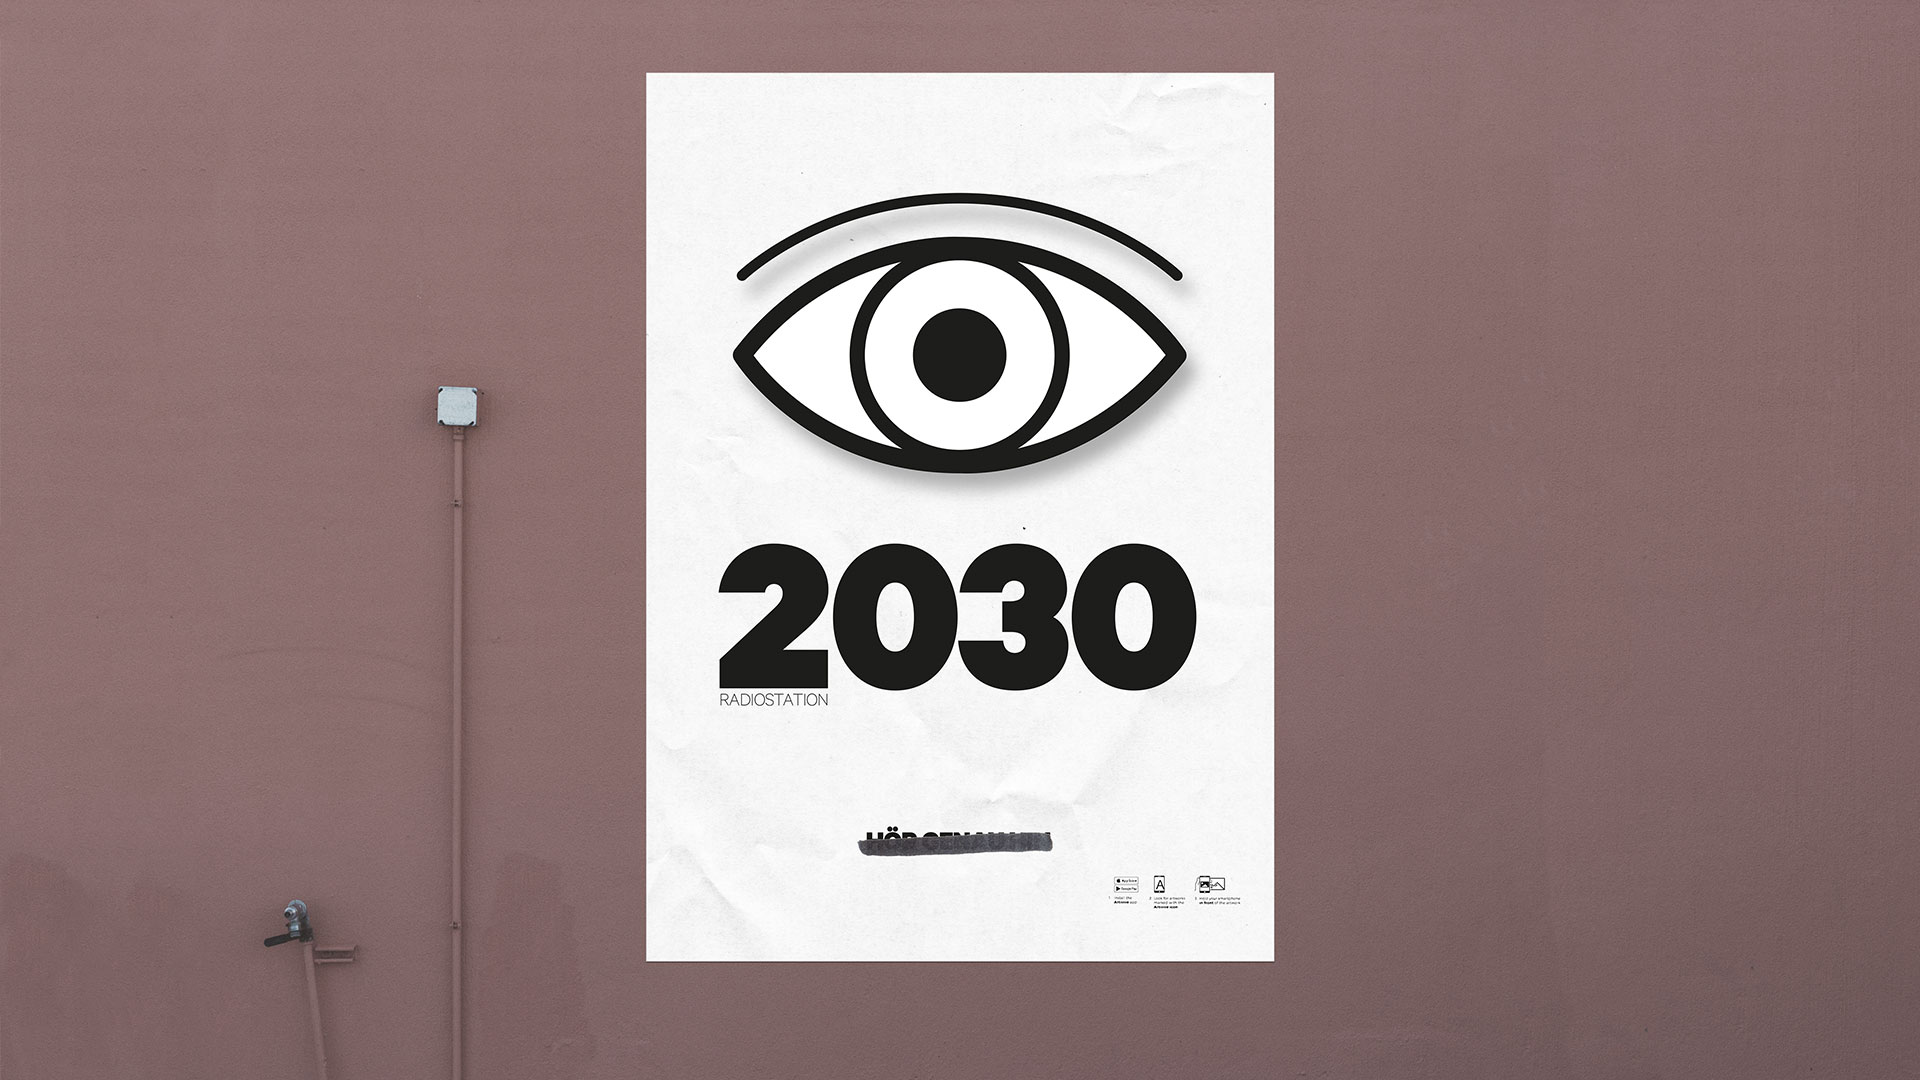 2030 RADIOSTATION